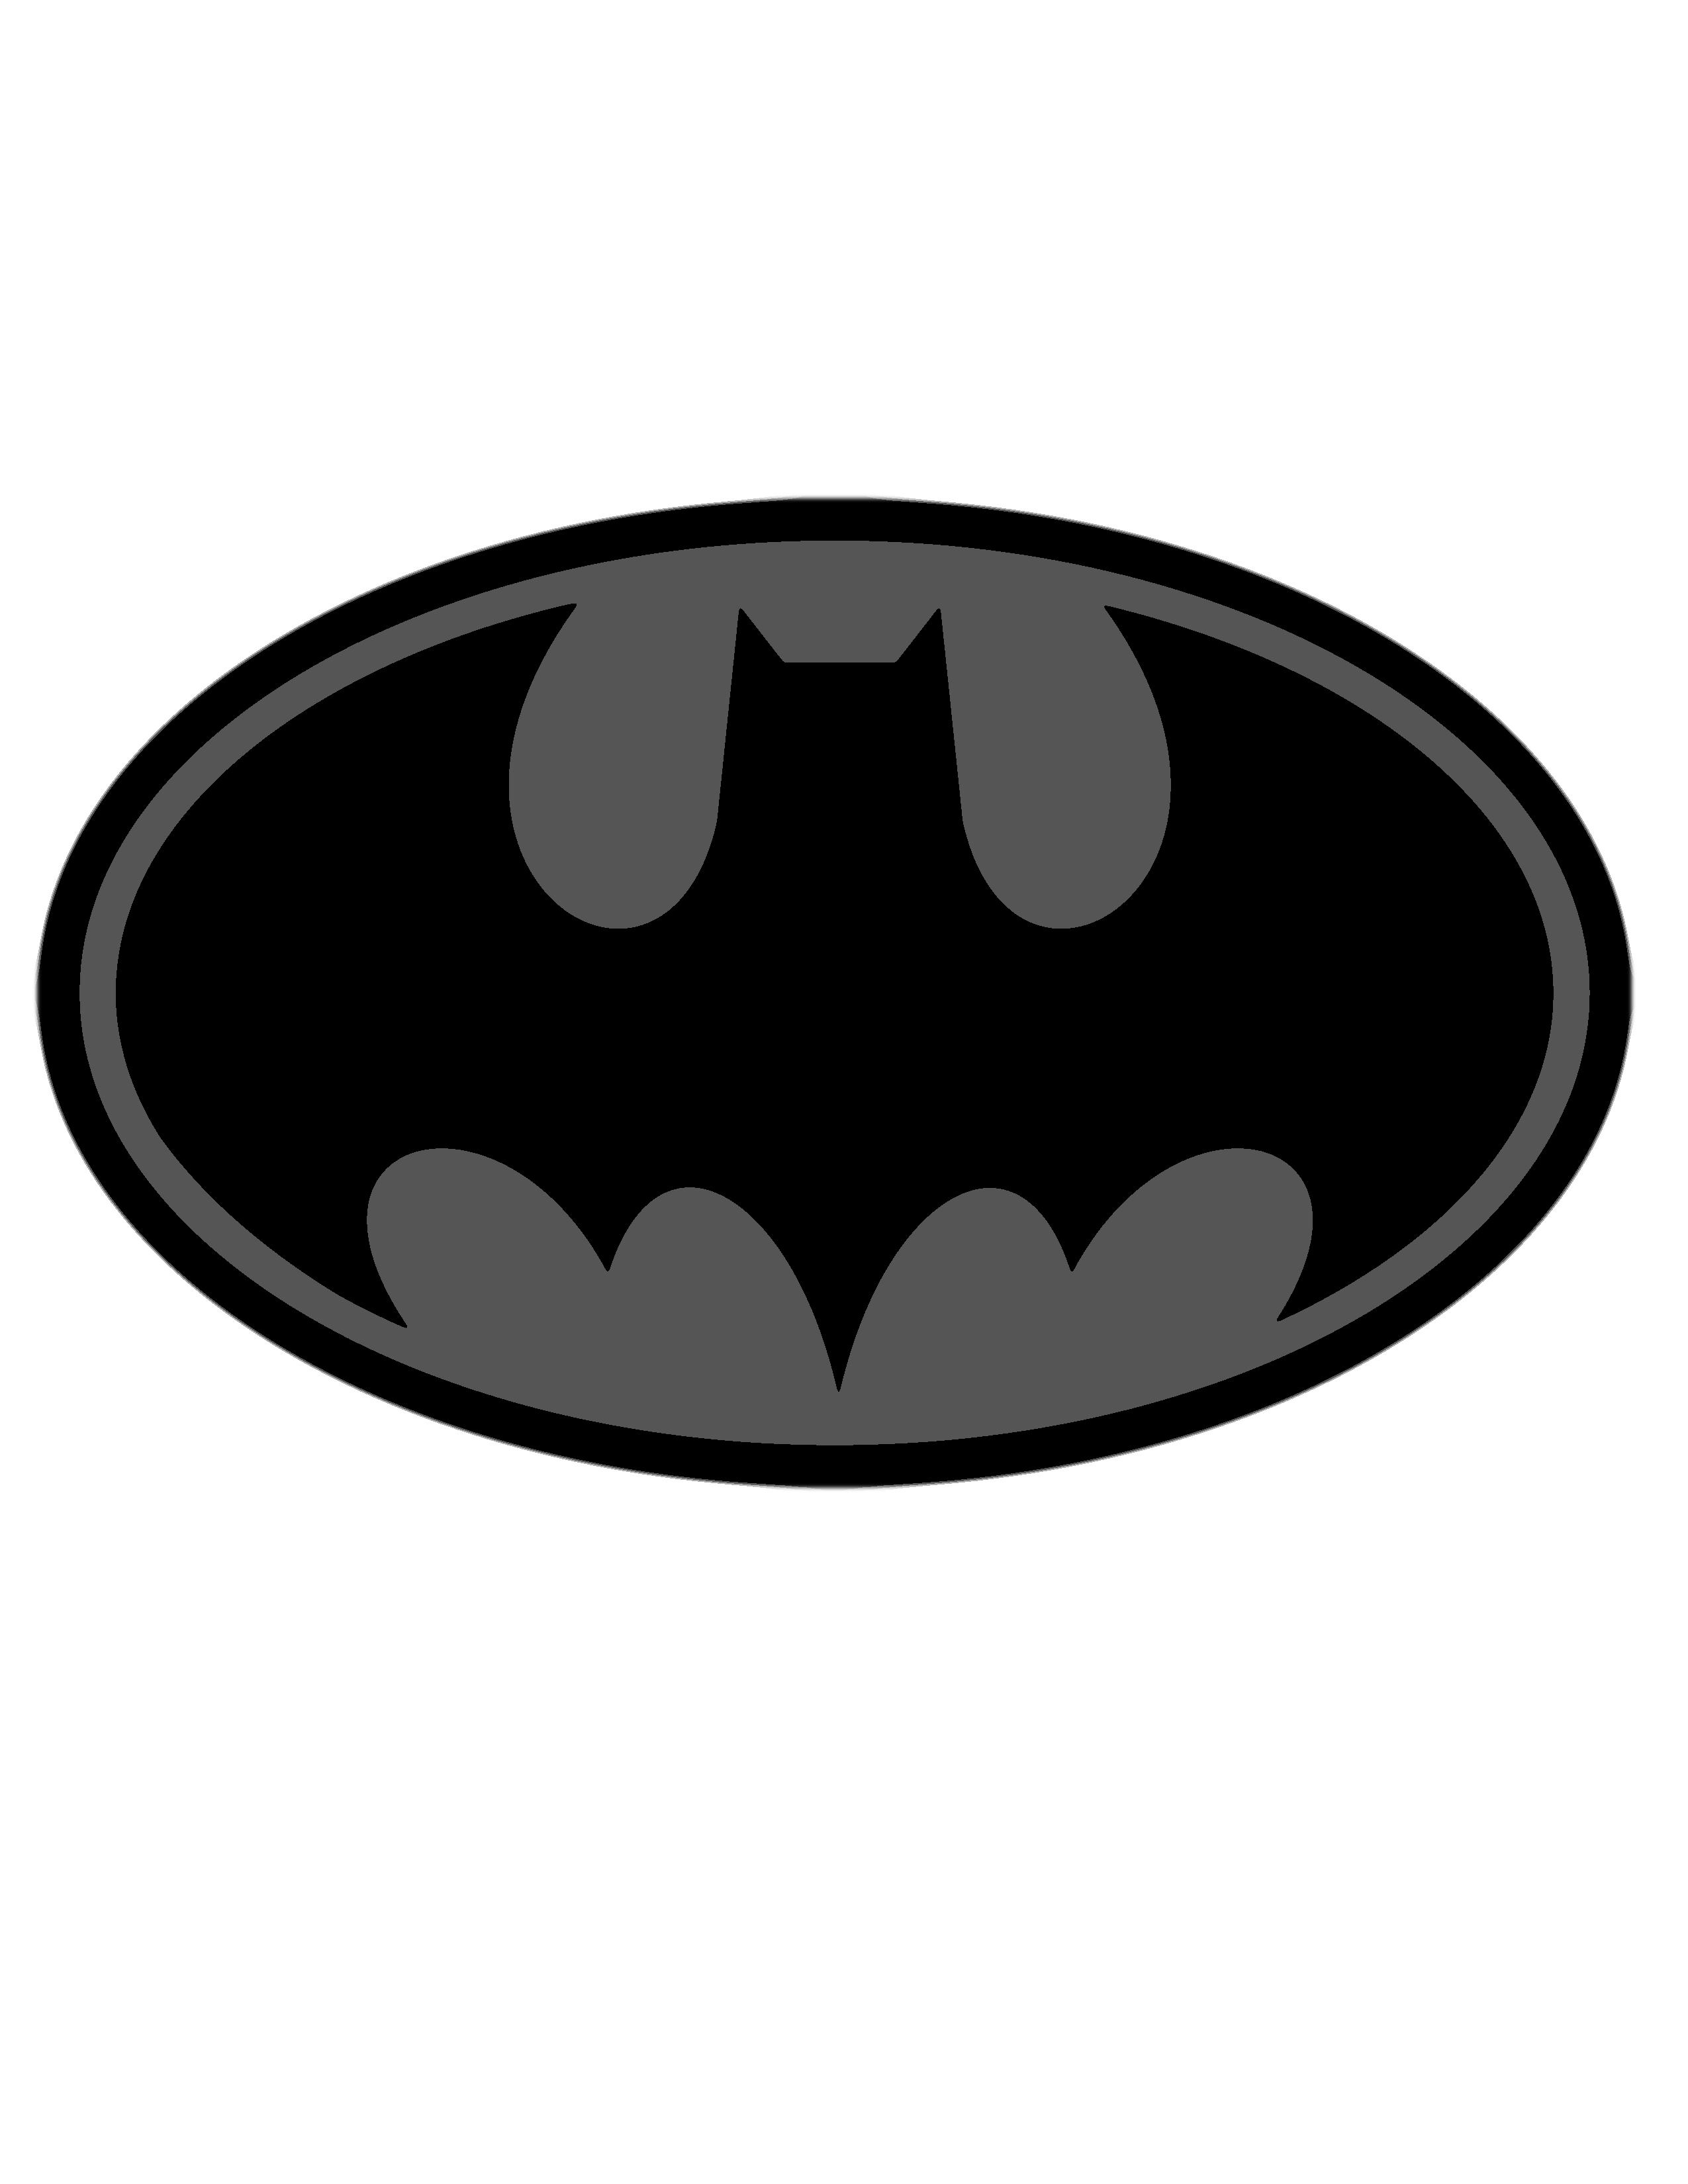 Batman Symbol Stencil Template for Free Download - ClipArt Best - ClipArt  Best